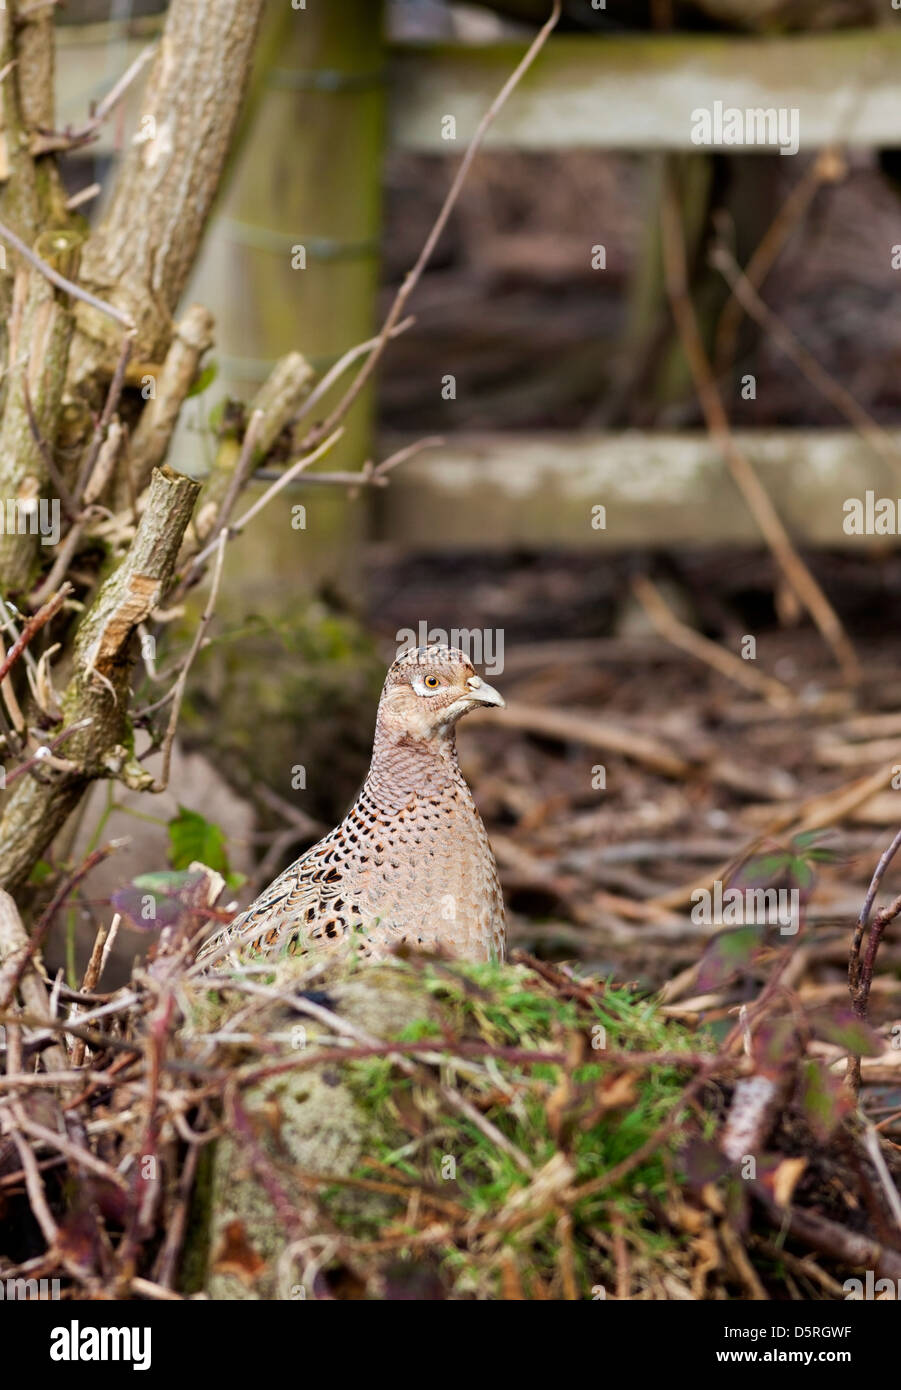 Female Pheasant Phasianus colchicus in Wooded Environment UK Stock Photo